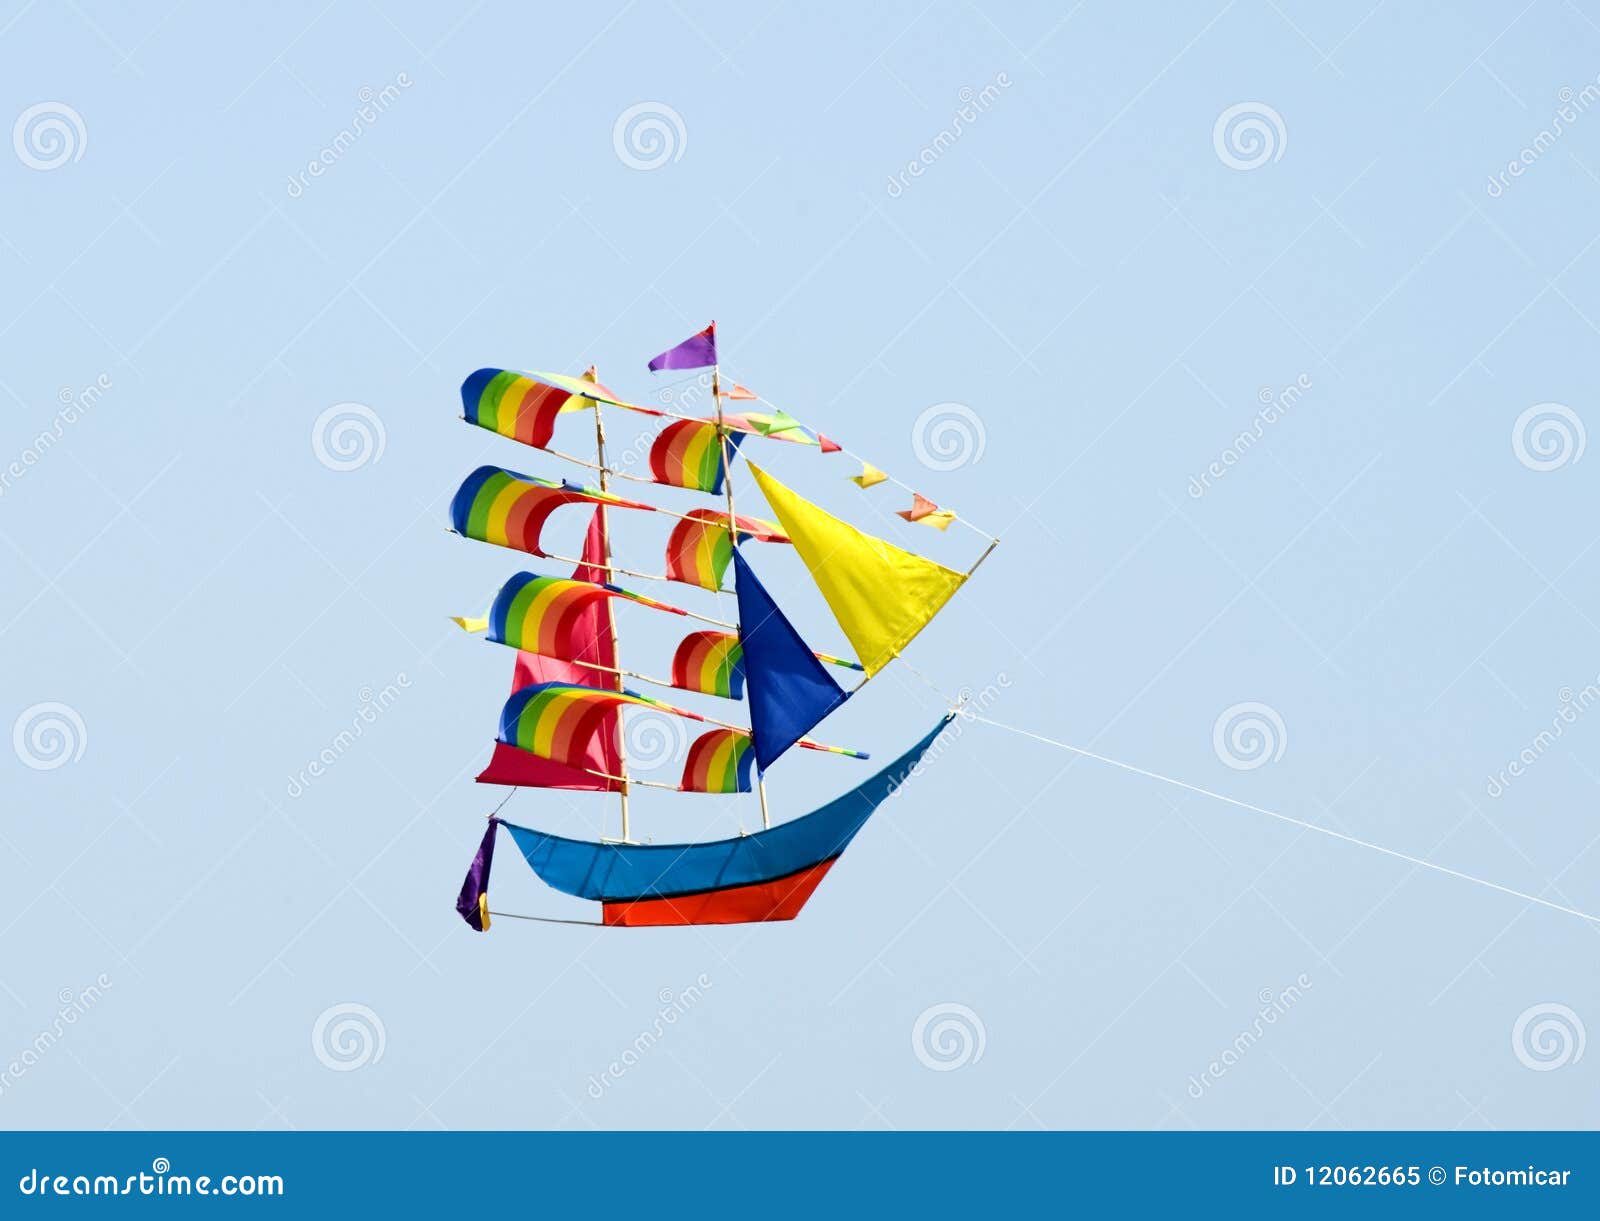 Flying Boat Shaped Kite stock image. Image of blue, sails 